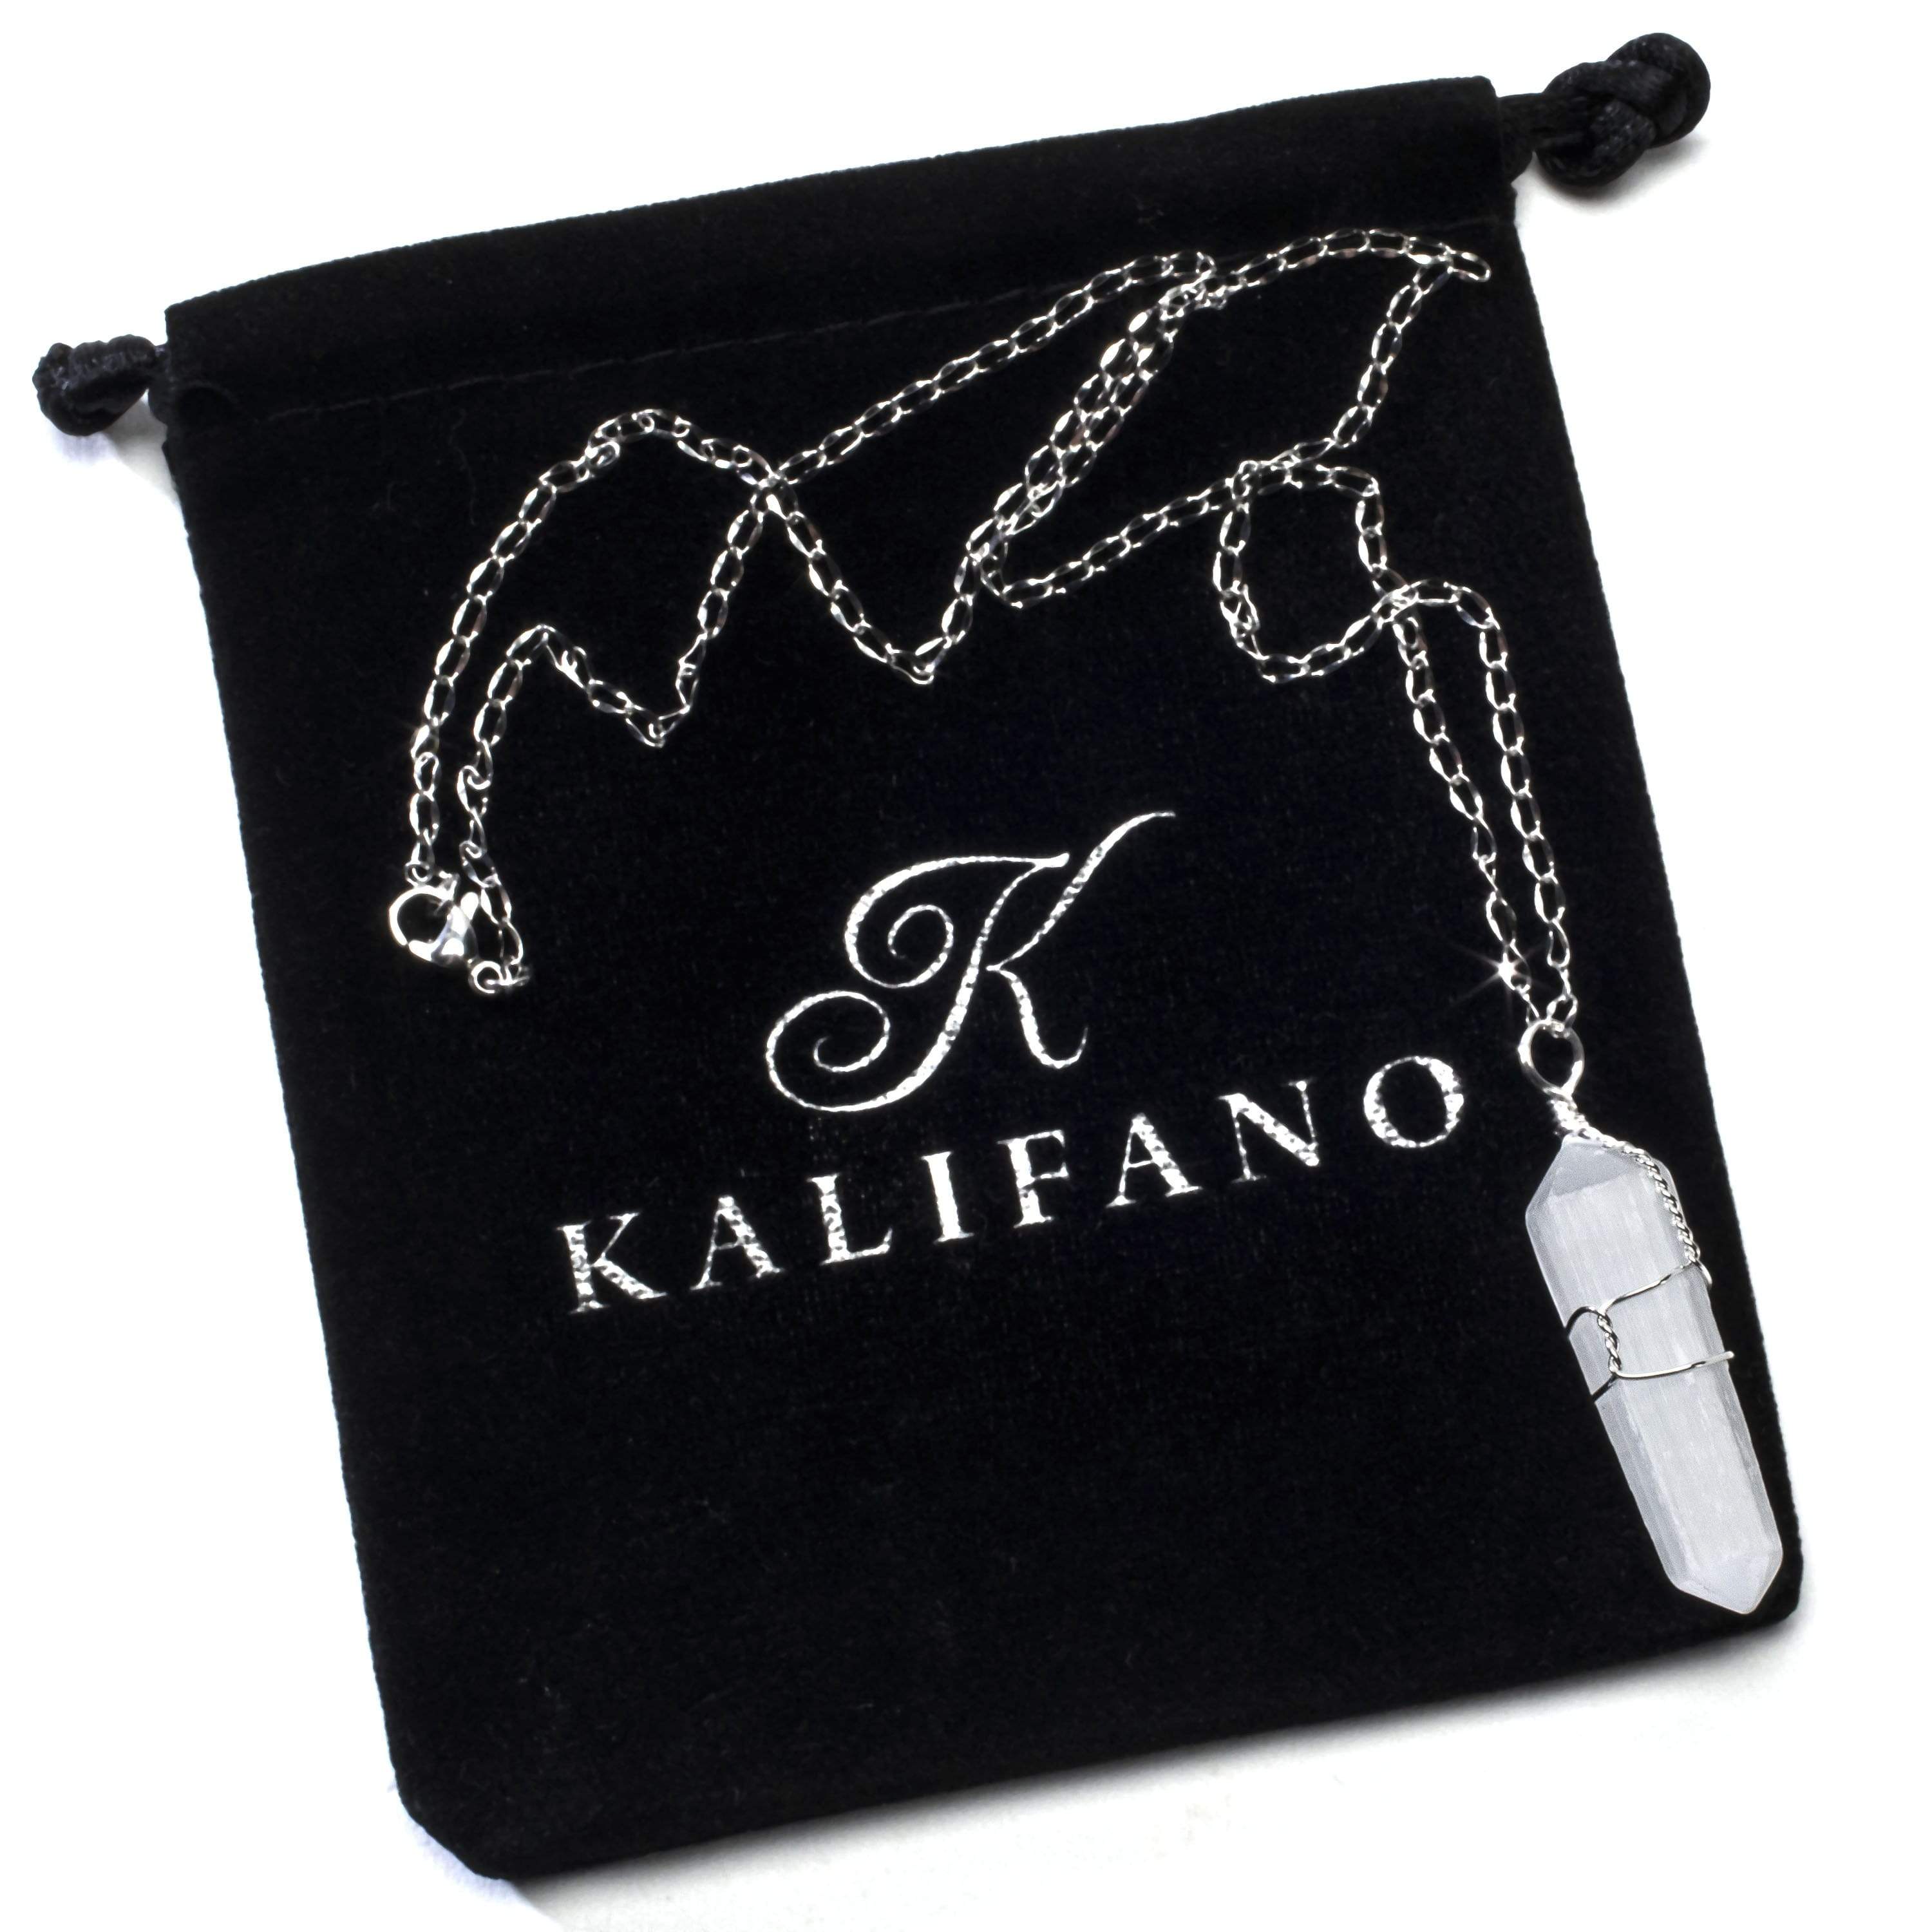 Kalifano Crystal Jewelry Selenite Point Healing Stone Pendant CJ20-SL